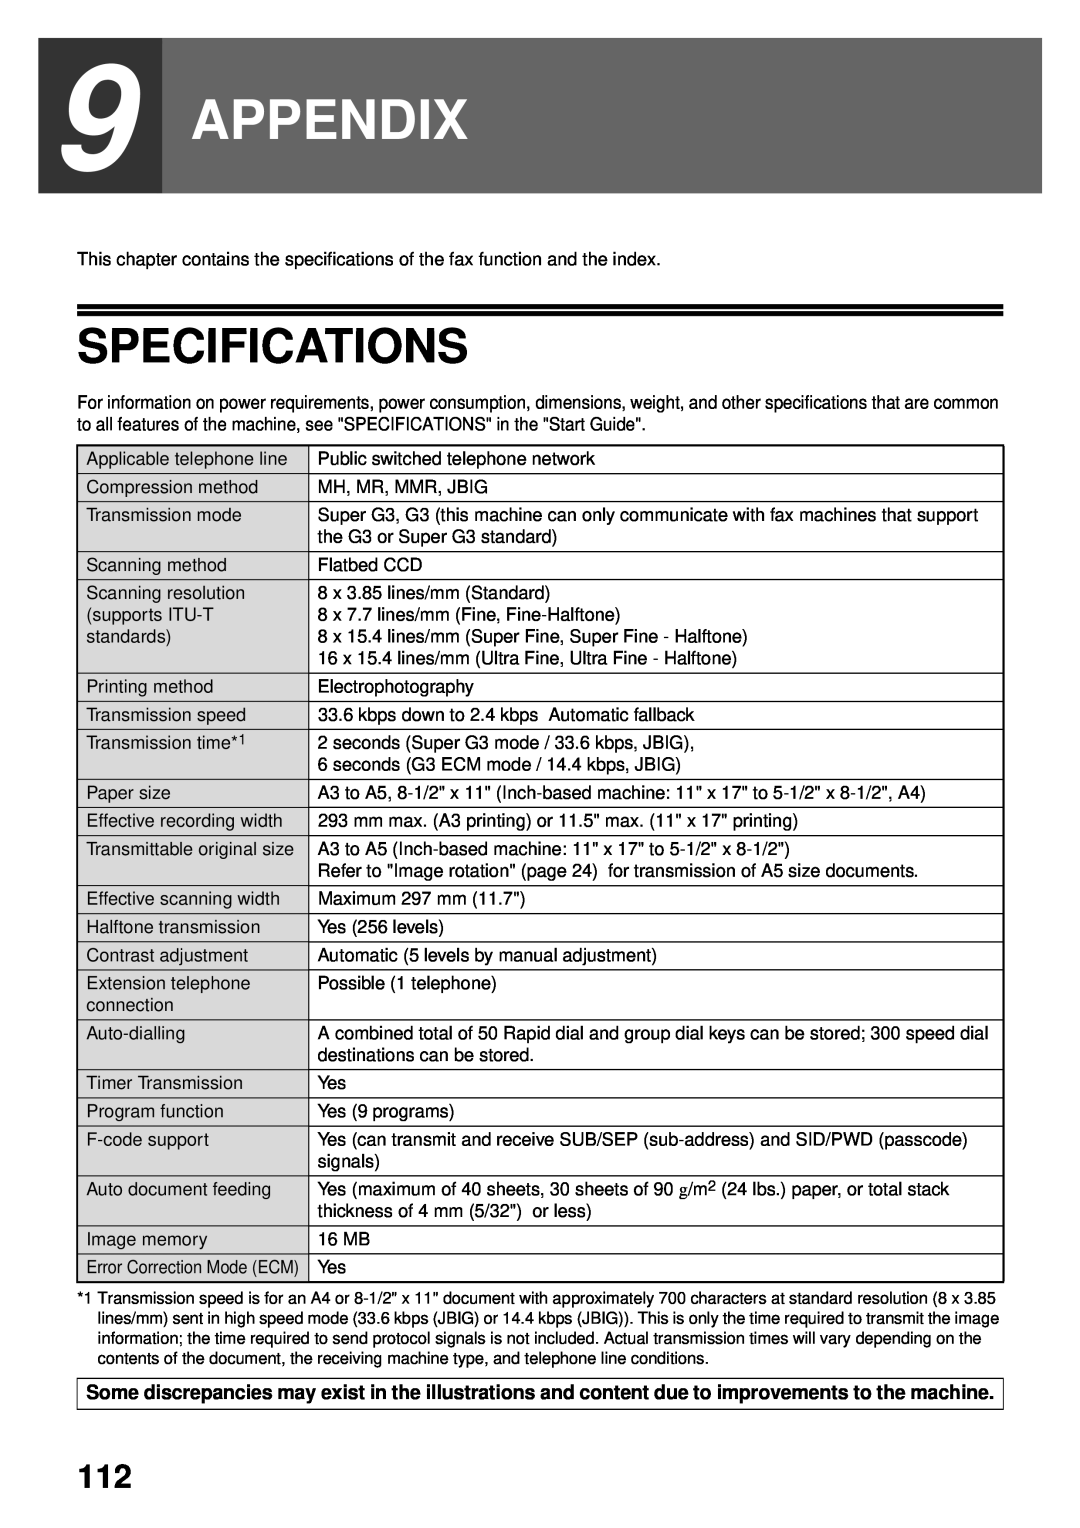 Sharp MX-FX13 appendix Appendix, Specifications 